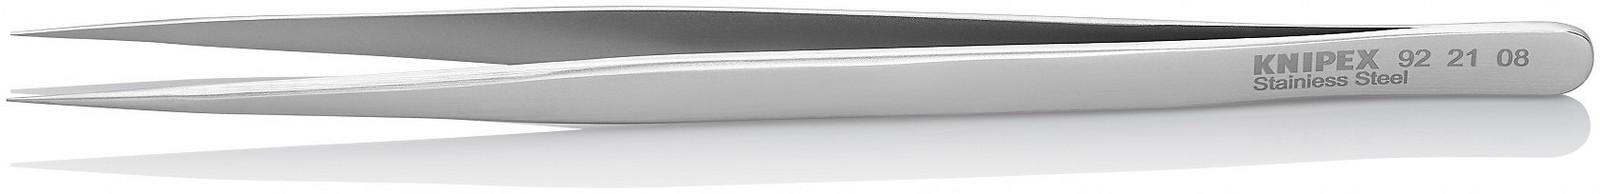 KNIPEX Univerzalna pinceta šiljasta 140mm 92 21 08 srebrni